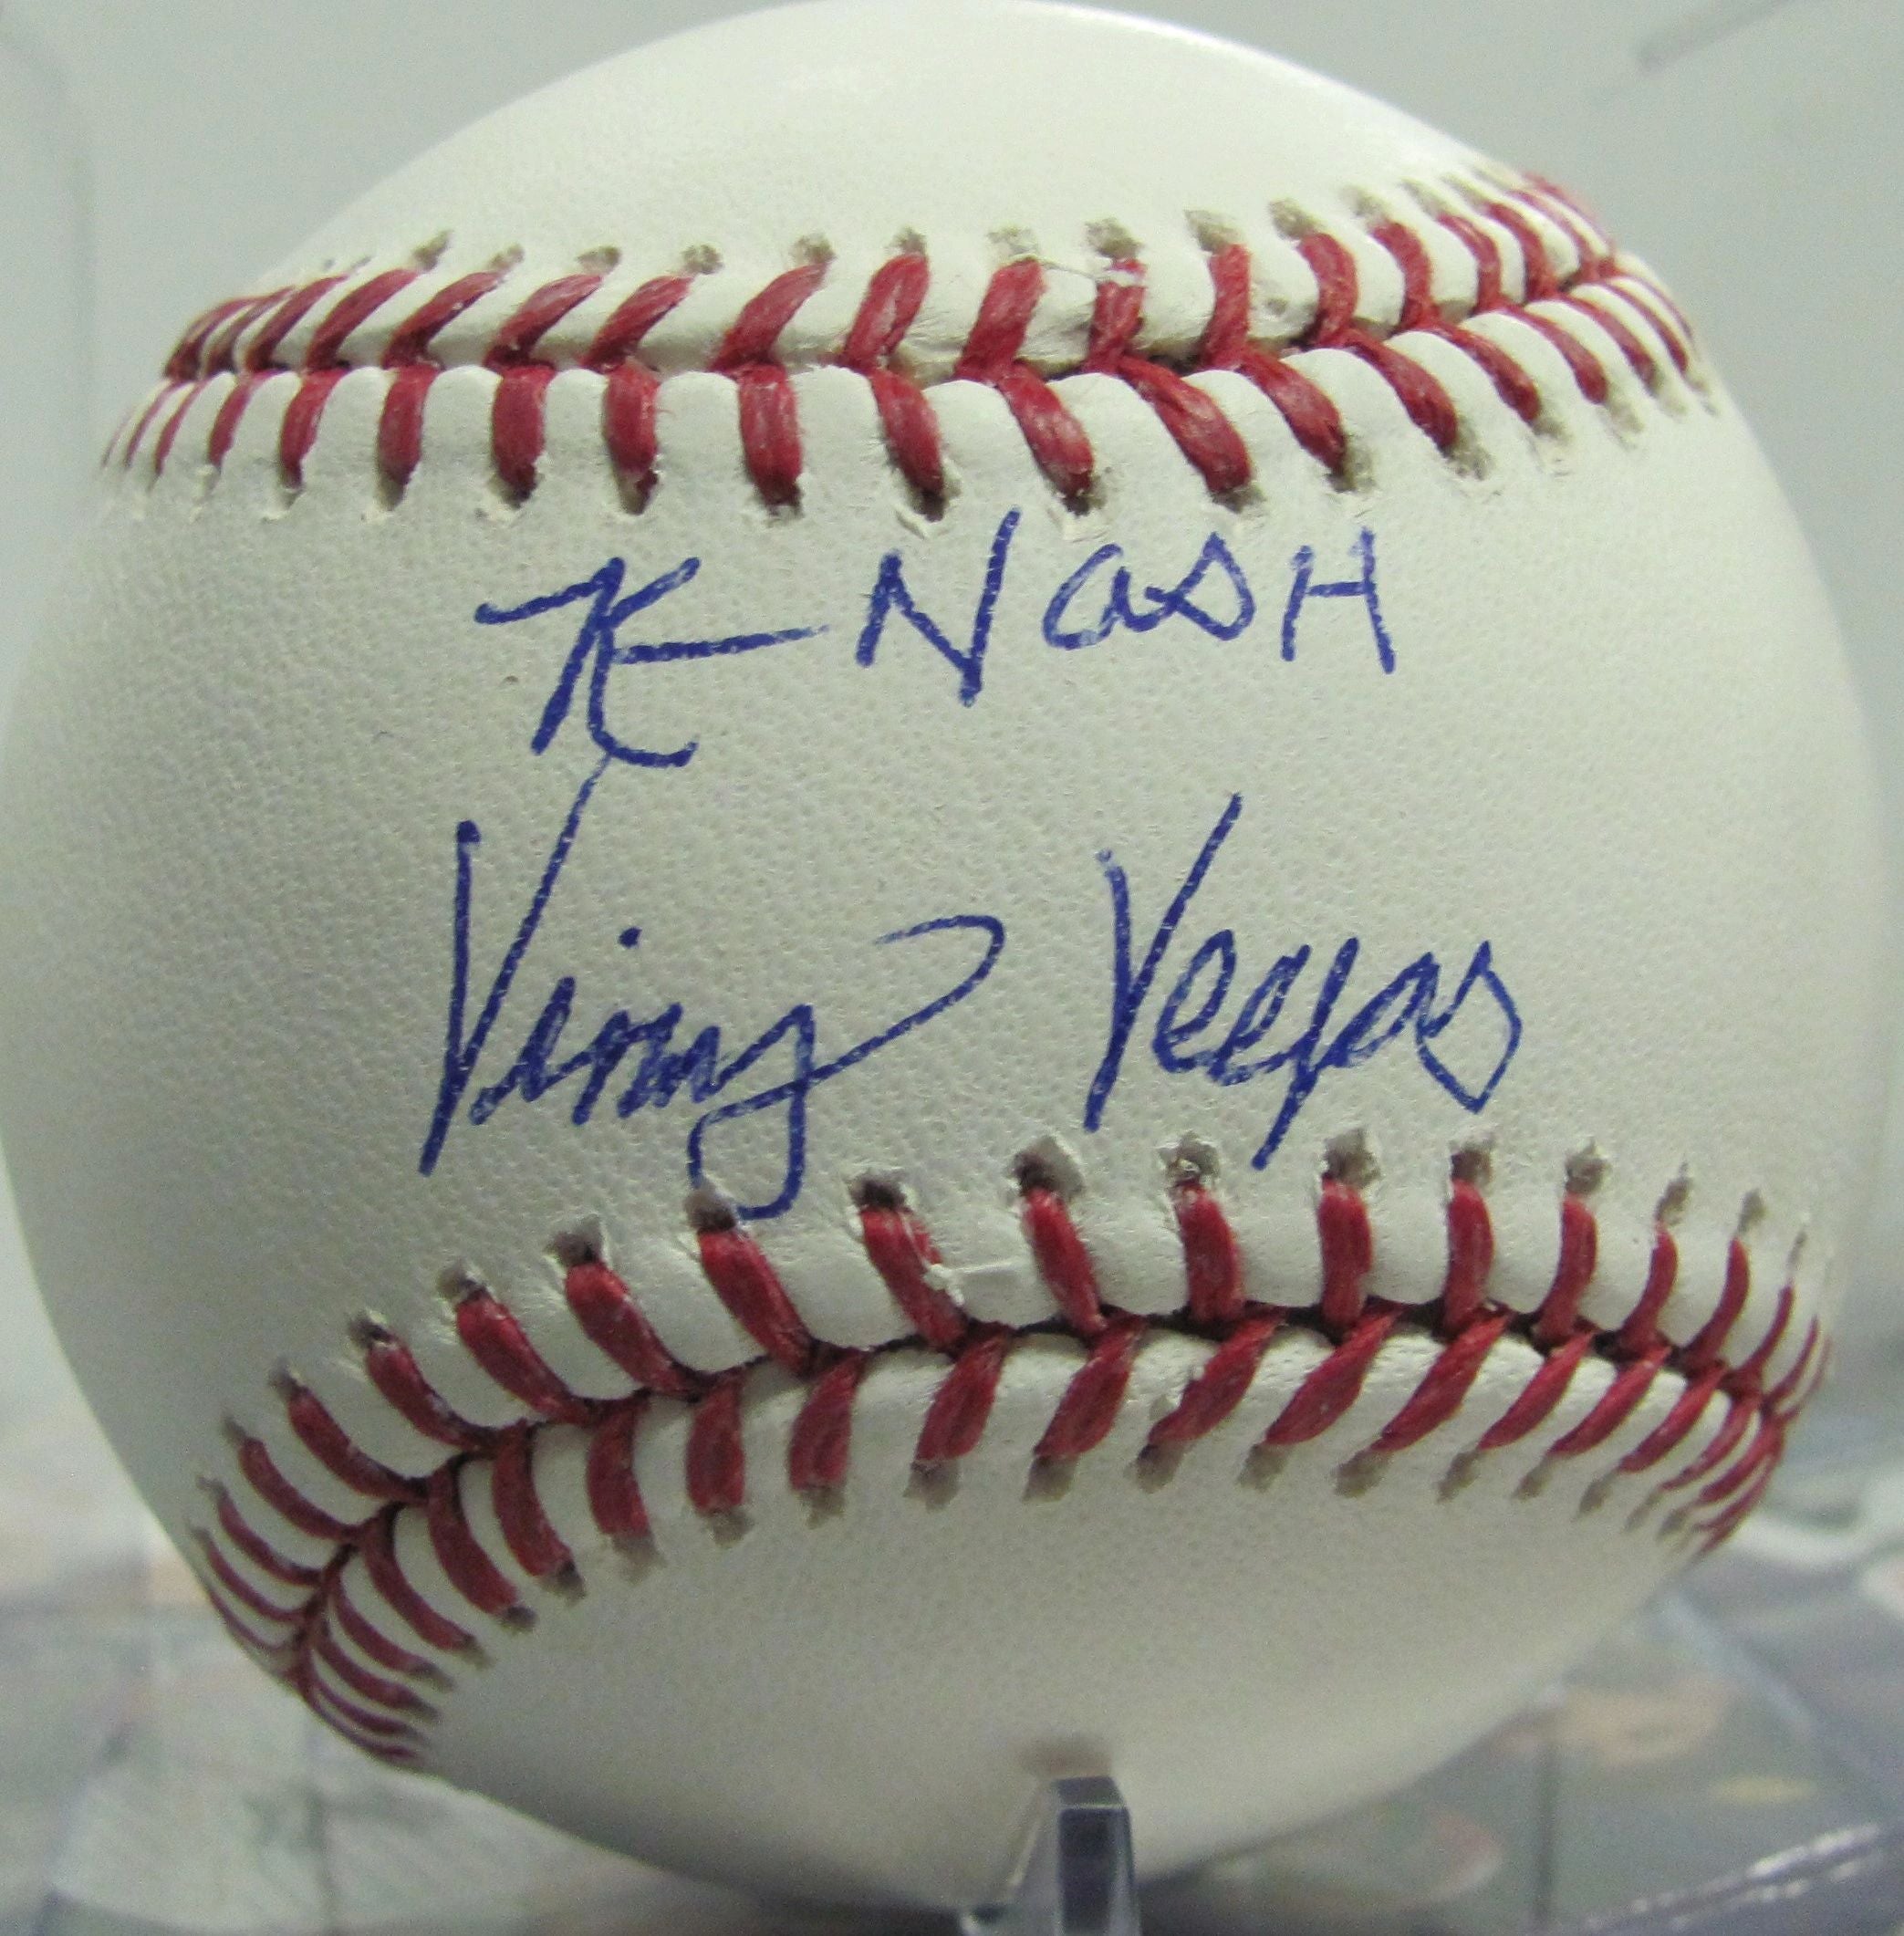 WWE TNA KEVIN NASH Signed Baseball Inscribed "Vinny Vegas" W/JSA COA